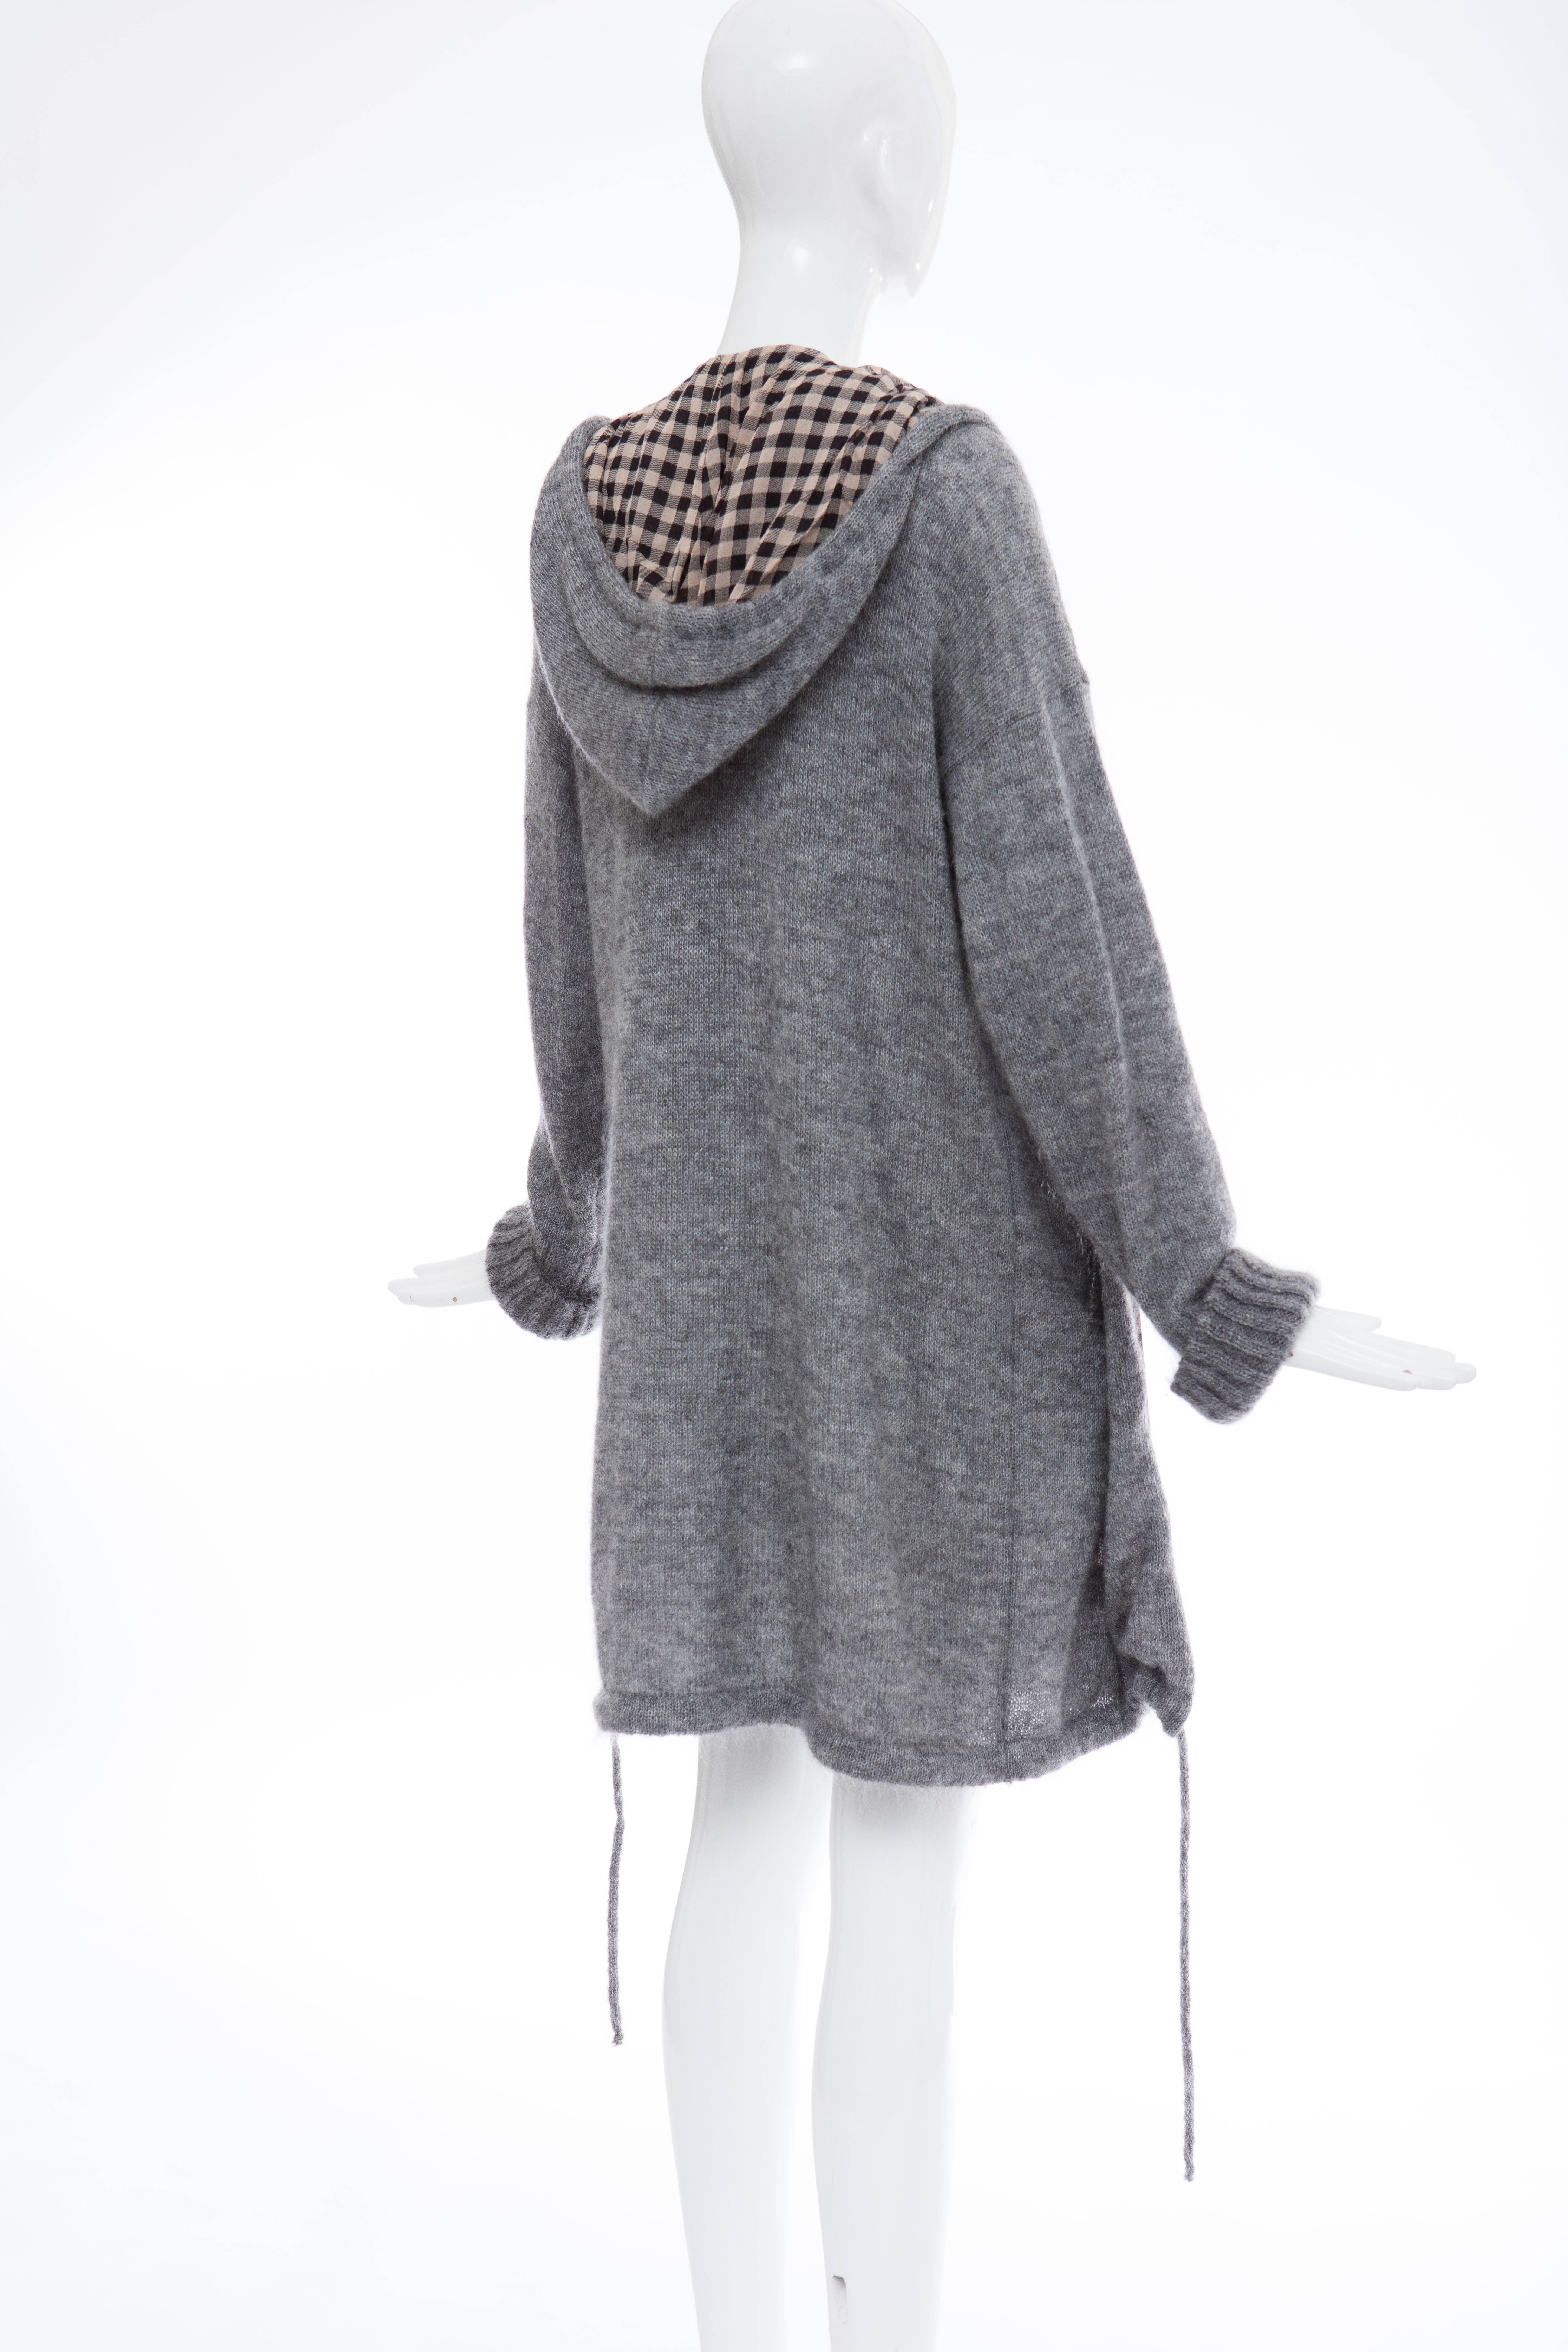 Jean Paul Gaultier Mohair Nylon Knit Dress With Hood , Autumn - Winter 2010 2